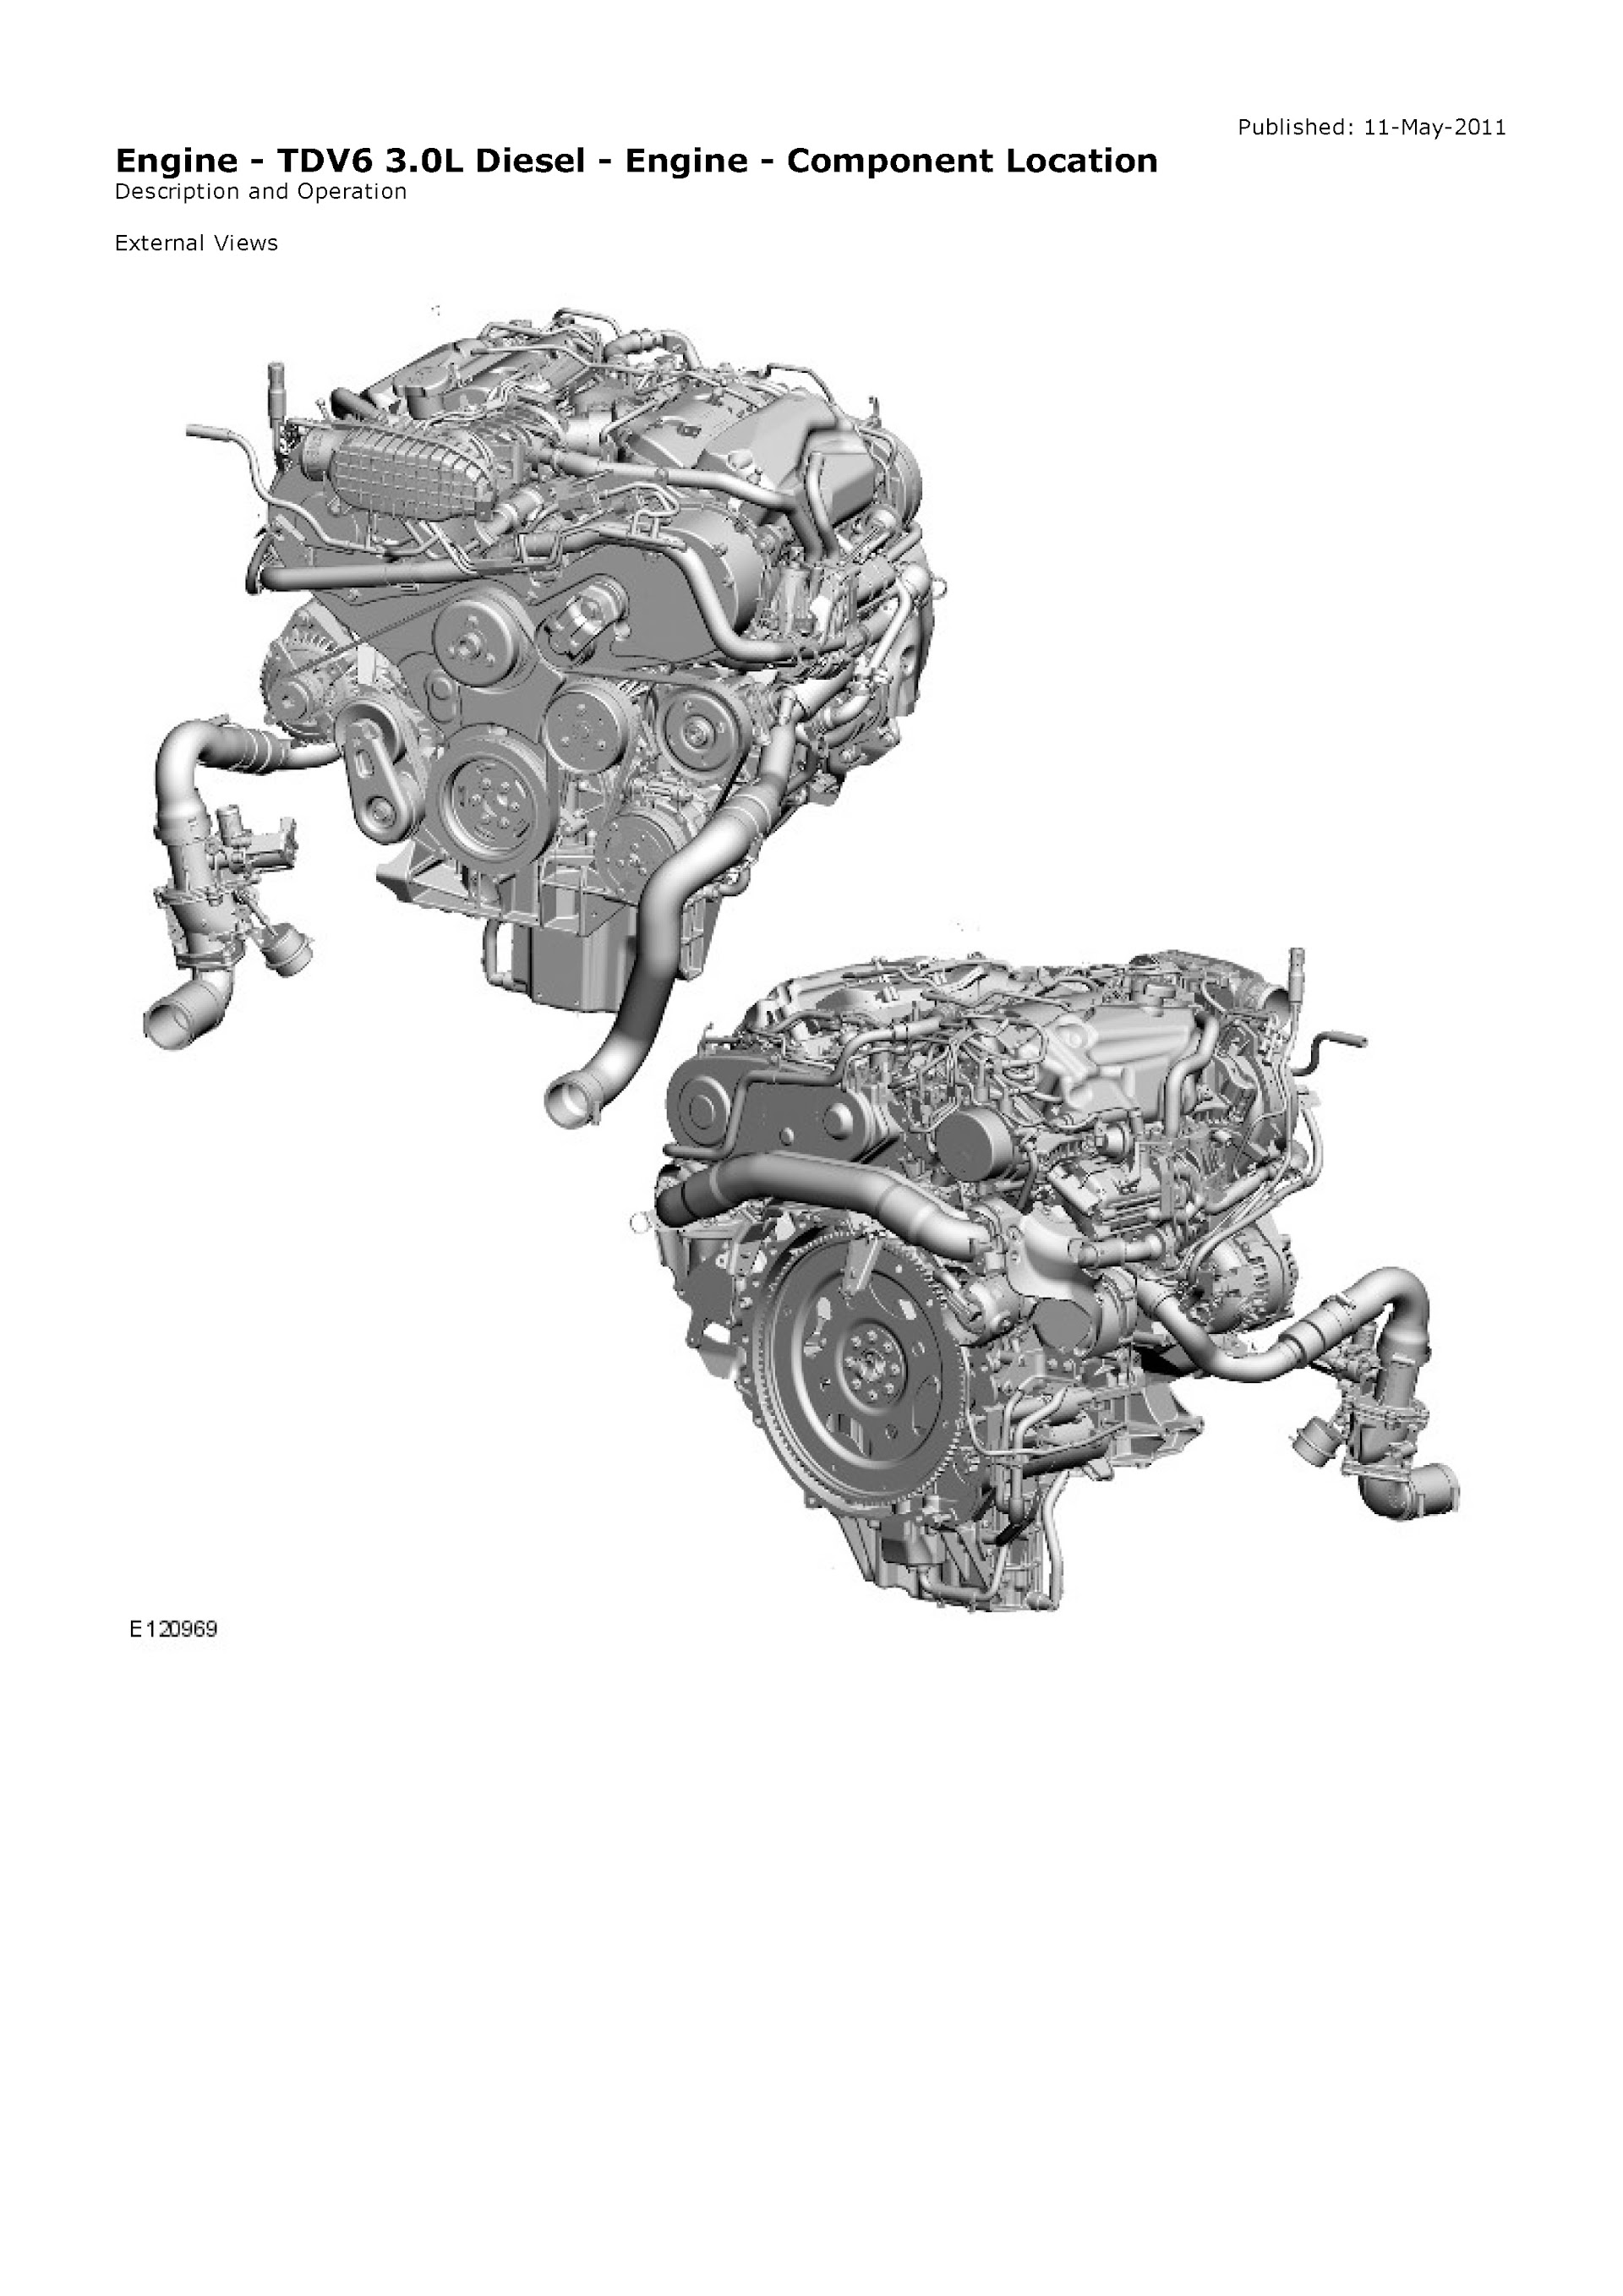 2009-2011 Land Rover Discovery 4 Repair Manual, Engine TDV6 3.0L Diesel